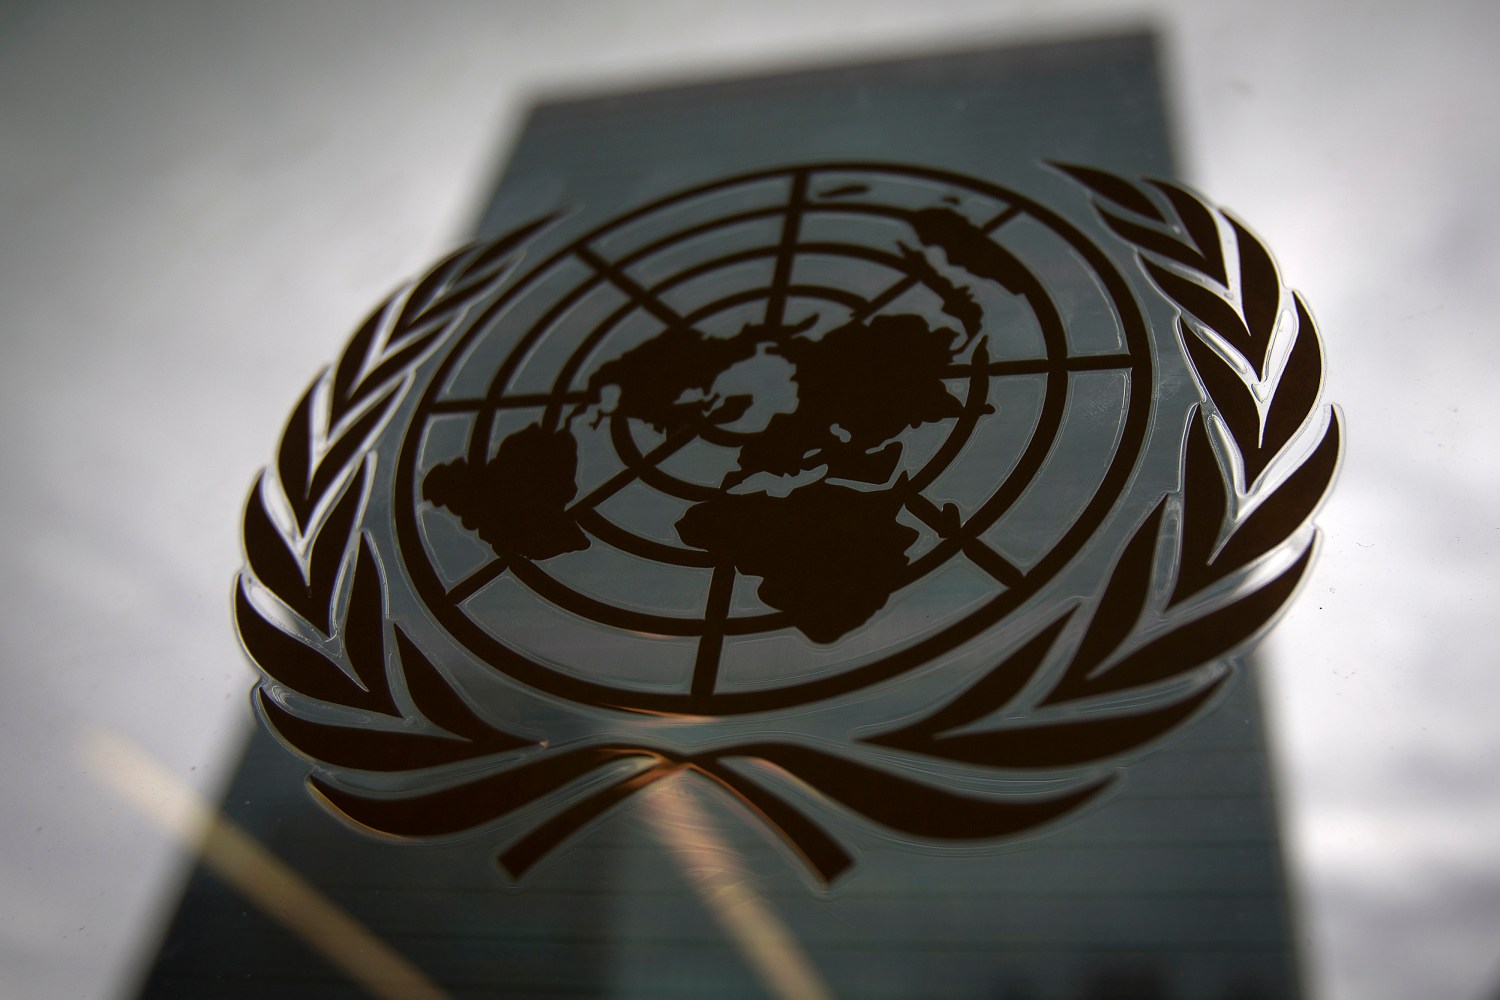 Image: UN logo and headquarters, Manhattan